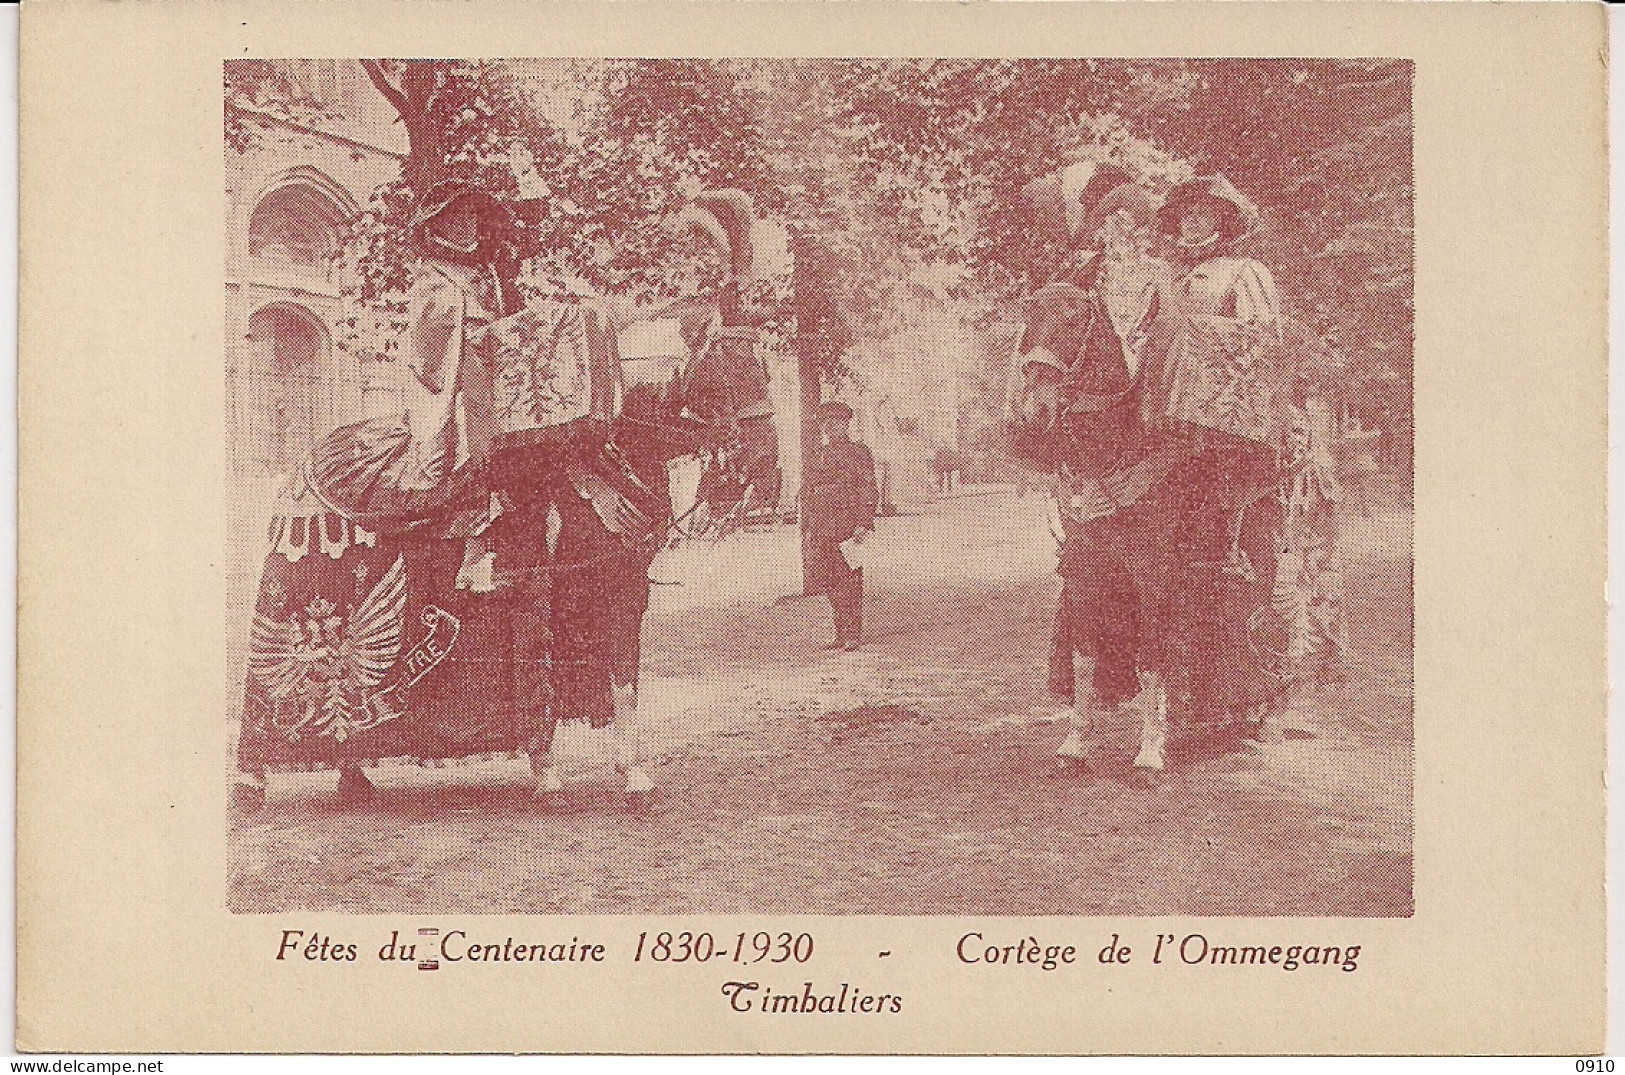 BRUXELLES-BRUSSEL " FETES DU CENTENAIRE 1830-1930-CORTEGE DE L'OMMEGANG-TIBALIERS-PAUKENISTEN" - Feesten En Evenementen